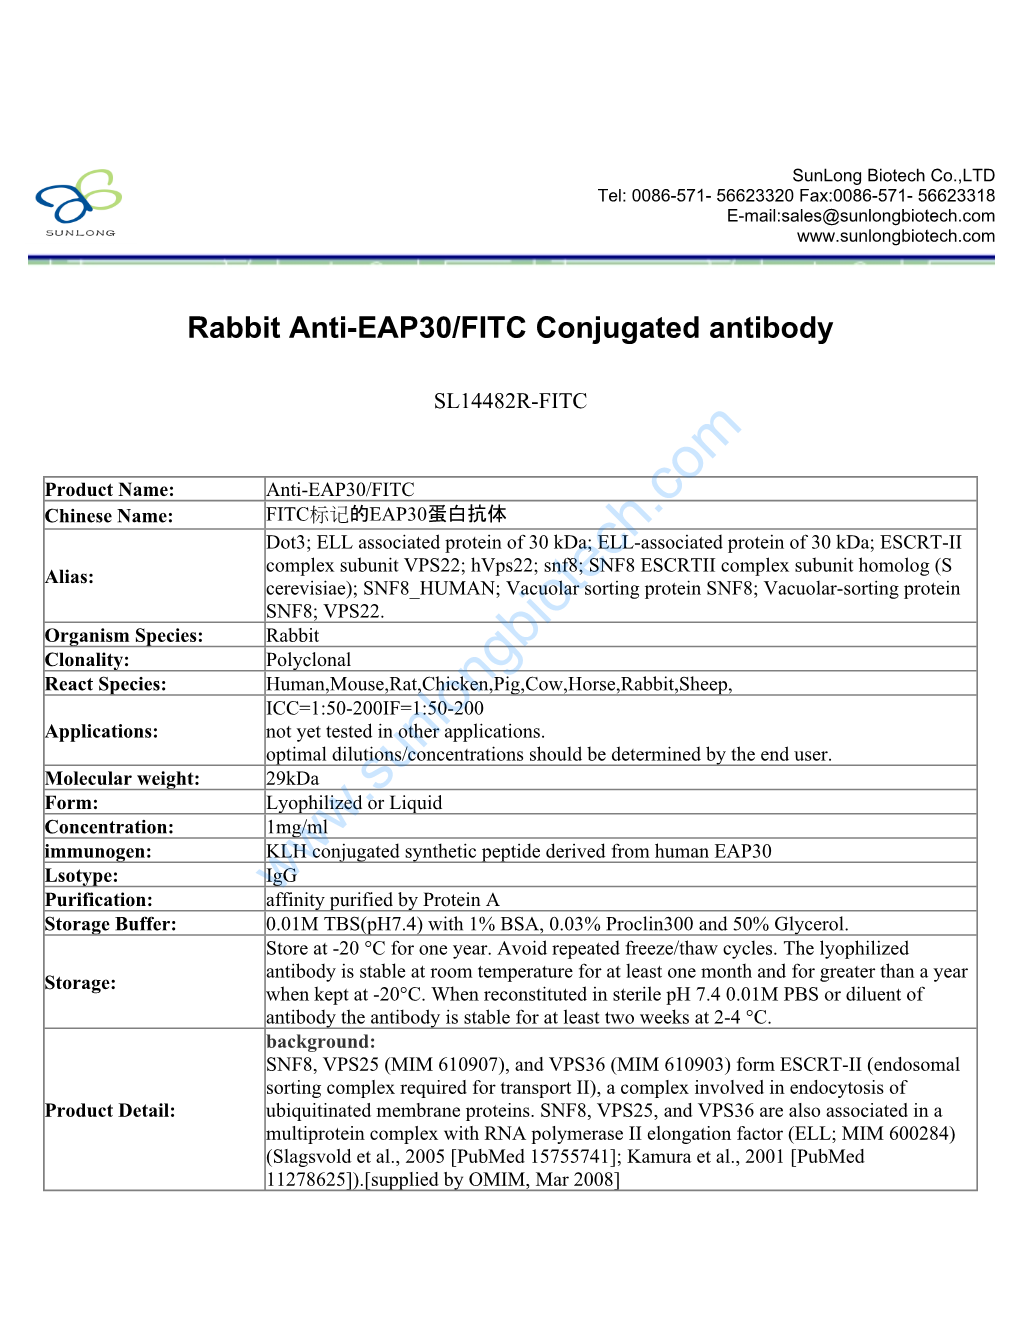 Rabbit Anti-EAP30/FITC Conjugated Antibody